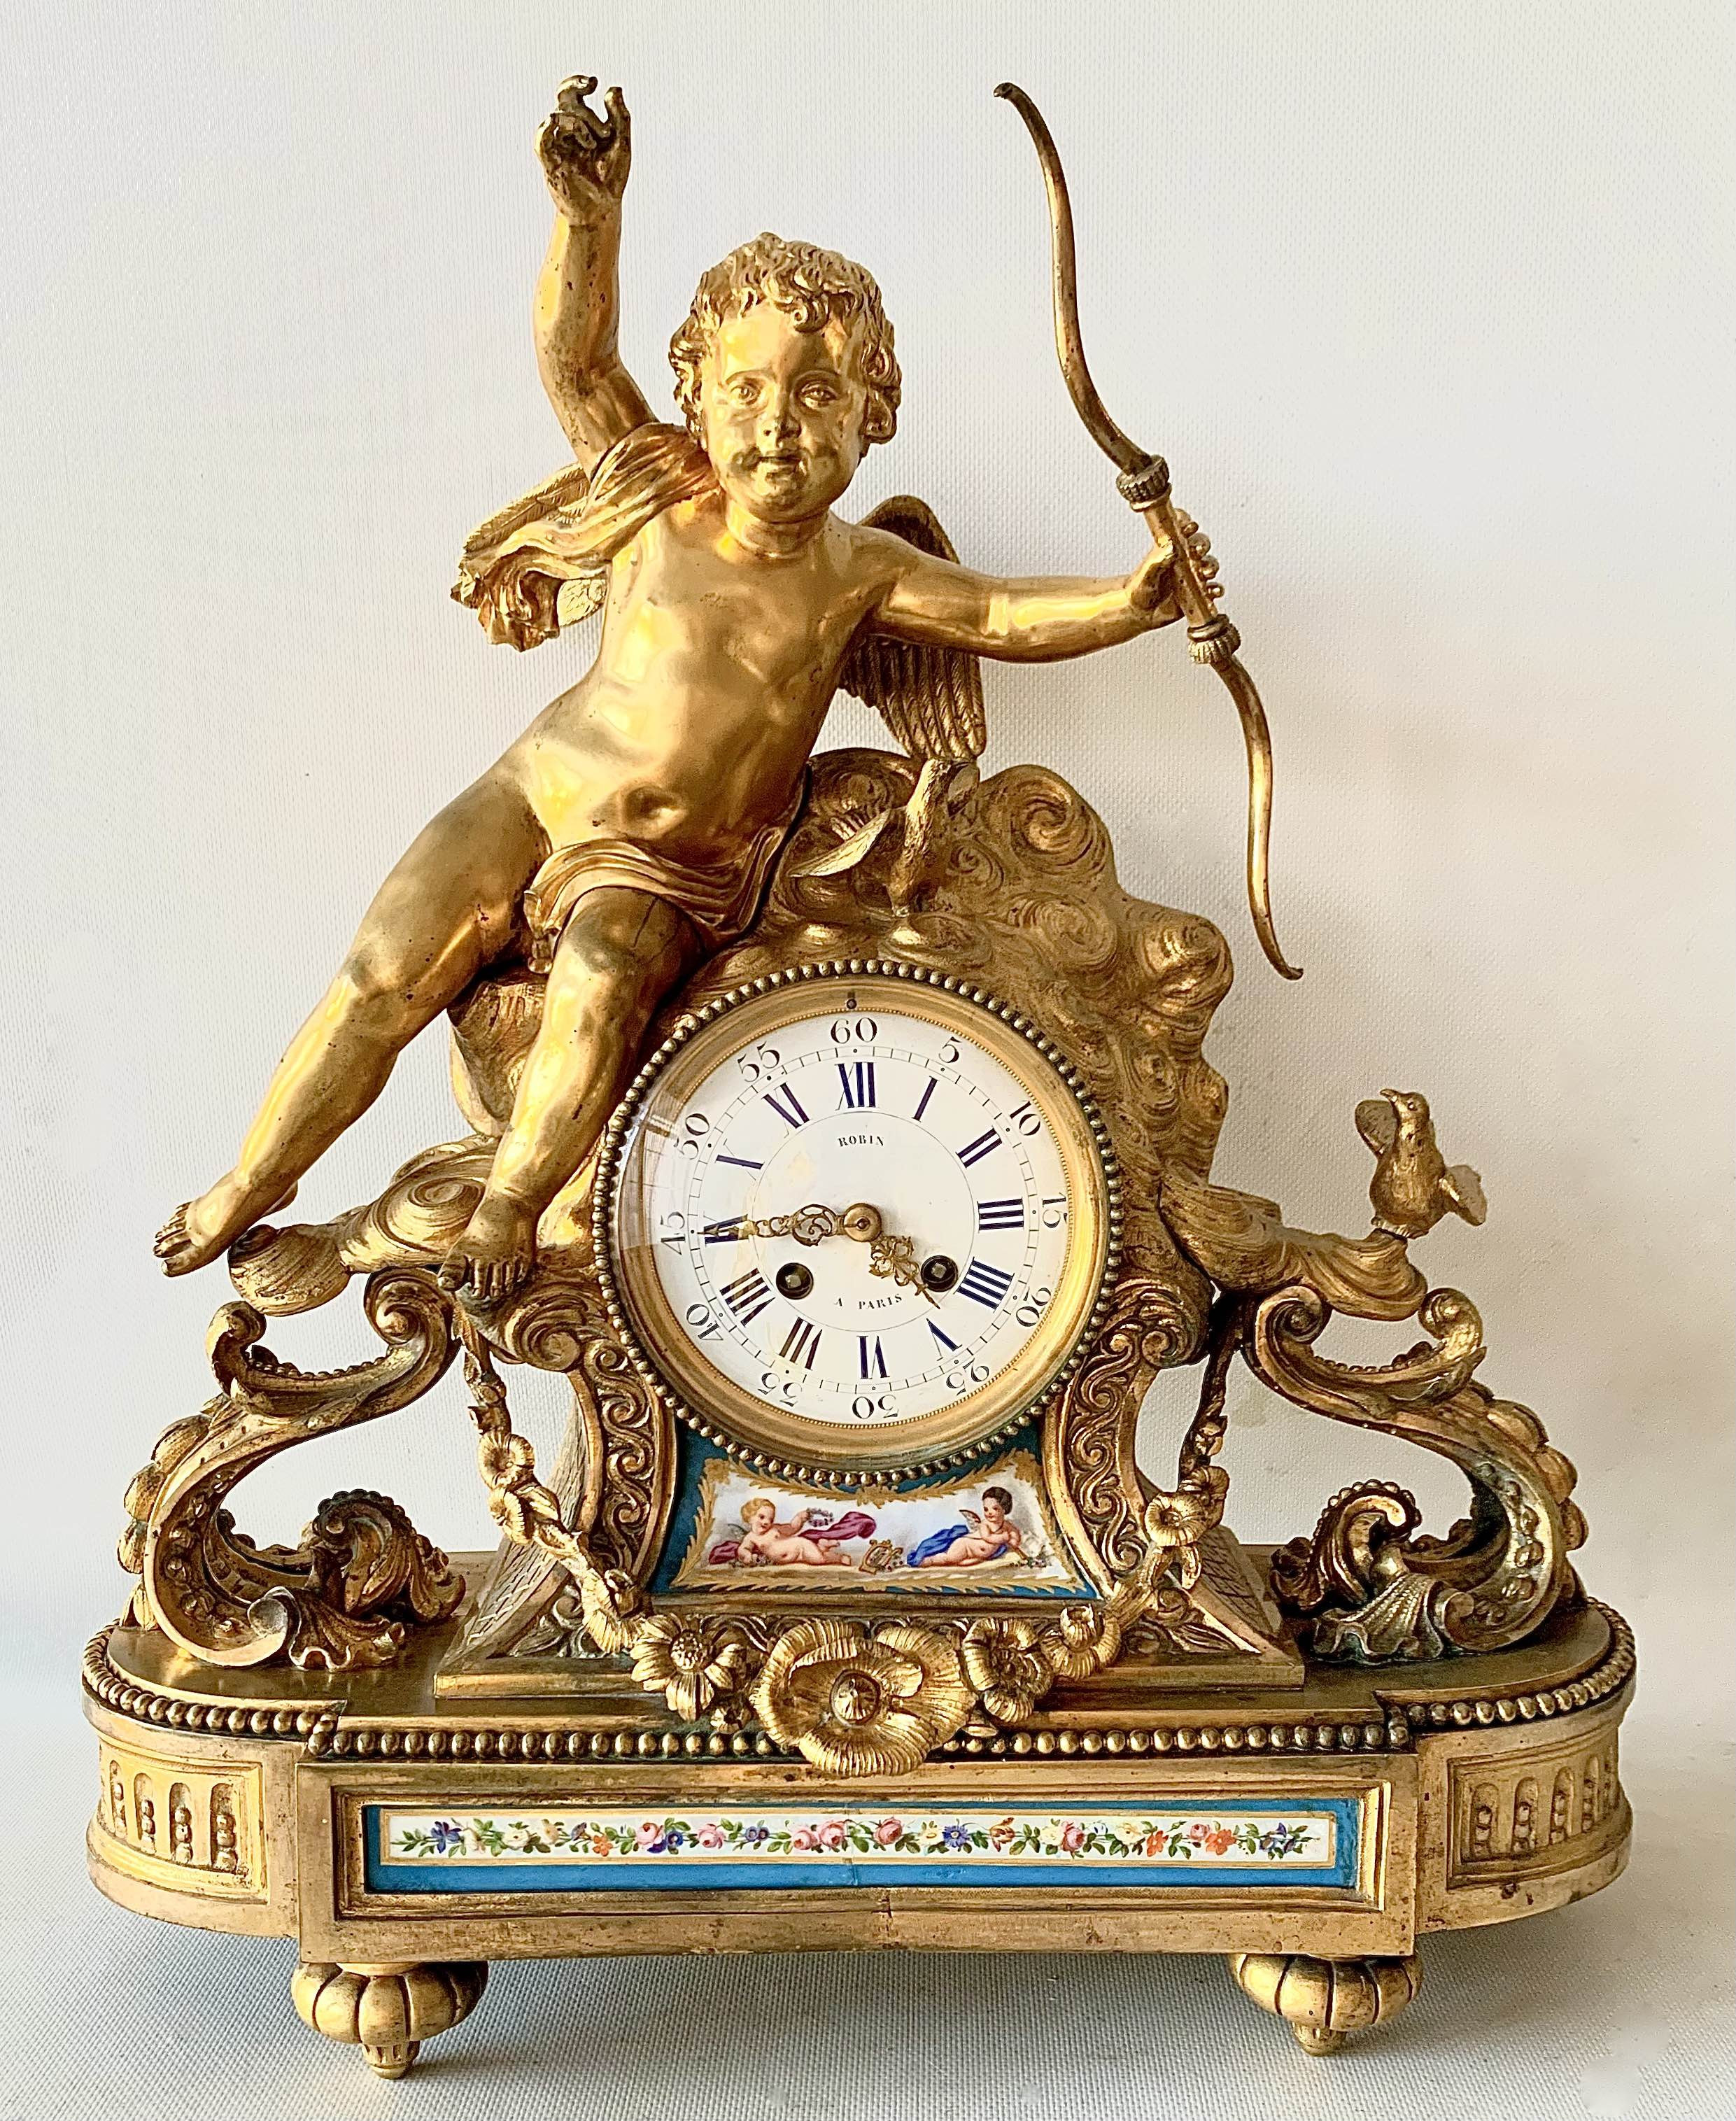 Laudes Madera-Reloj de mesa de madera -Ardavín Relojes Siglo XV